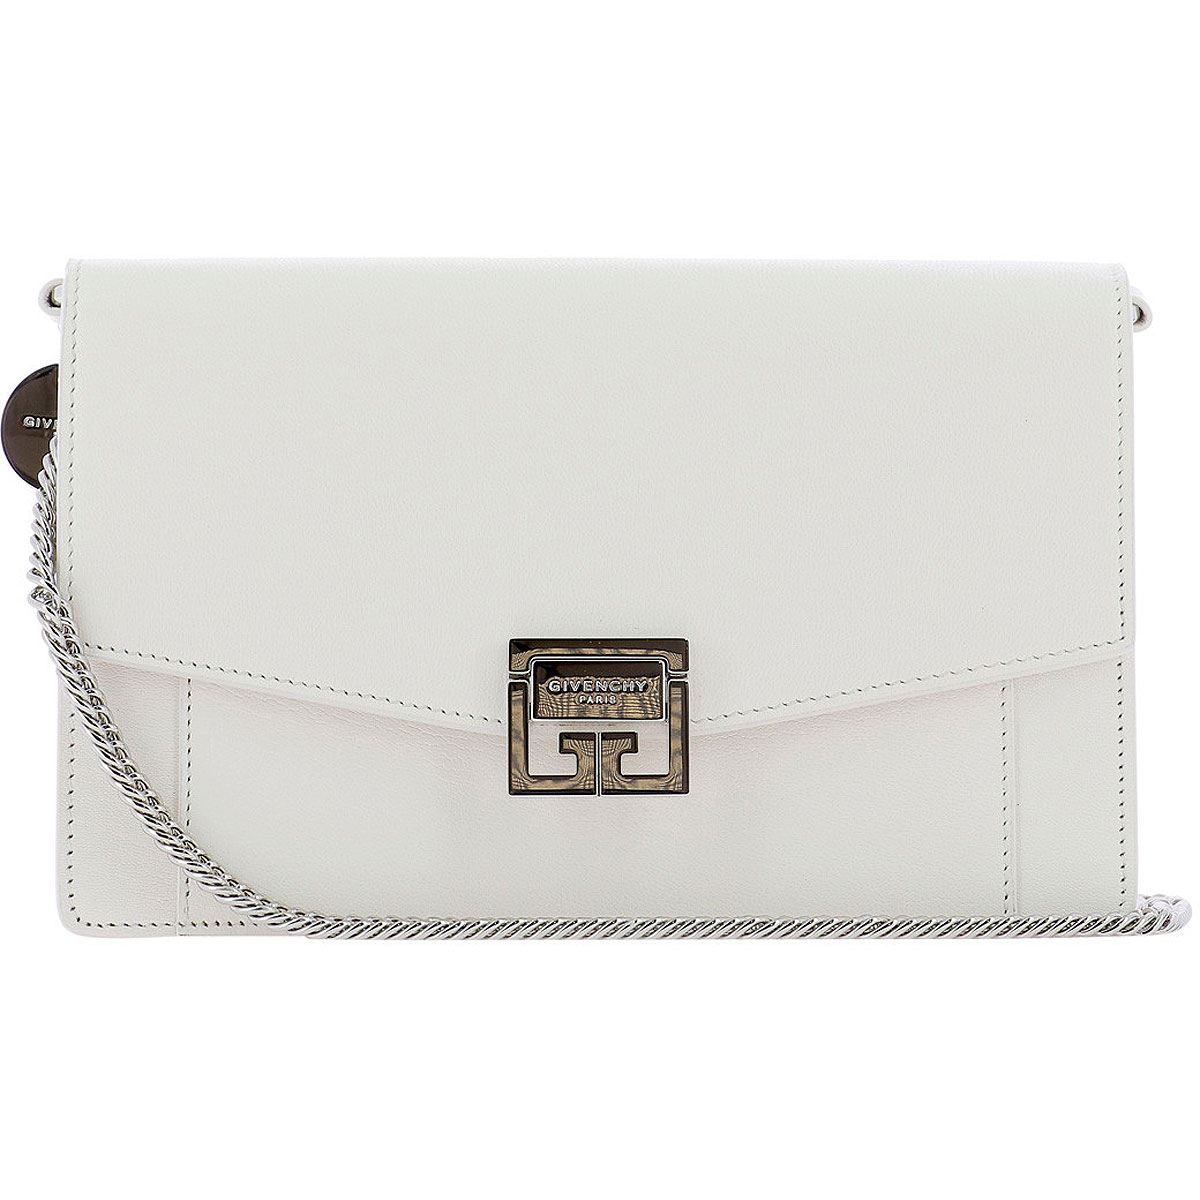 Handbags Givenchy, Style code: bbu00kb131-105-B923